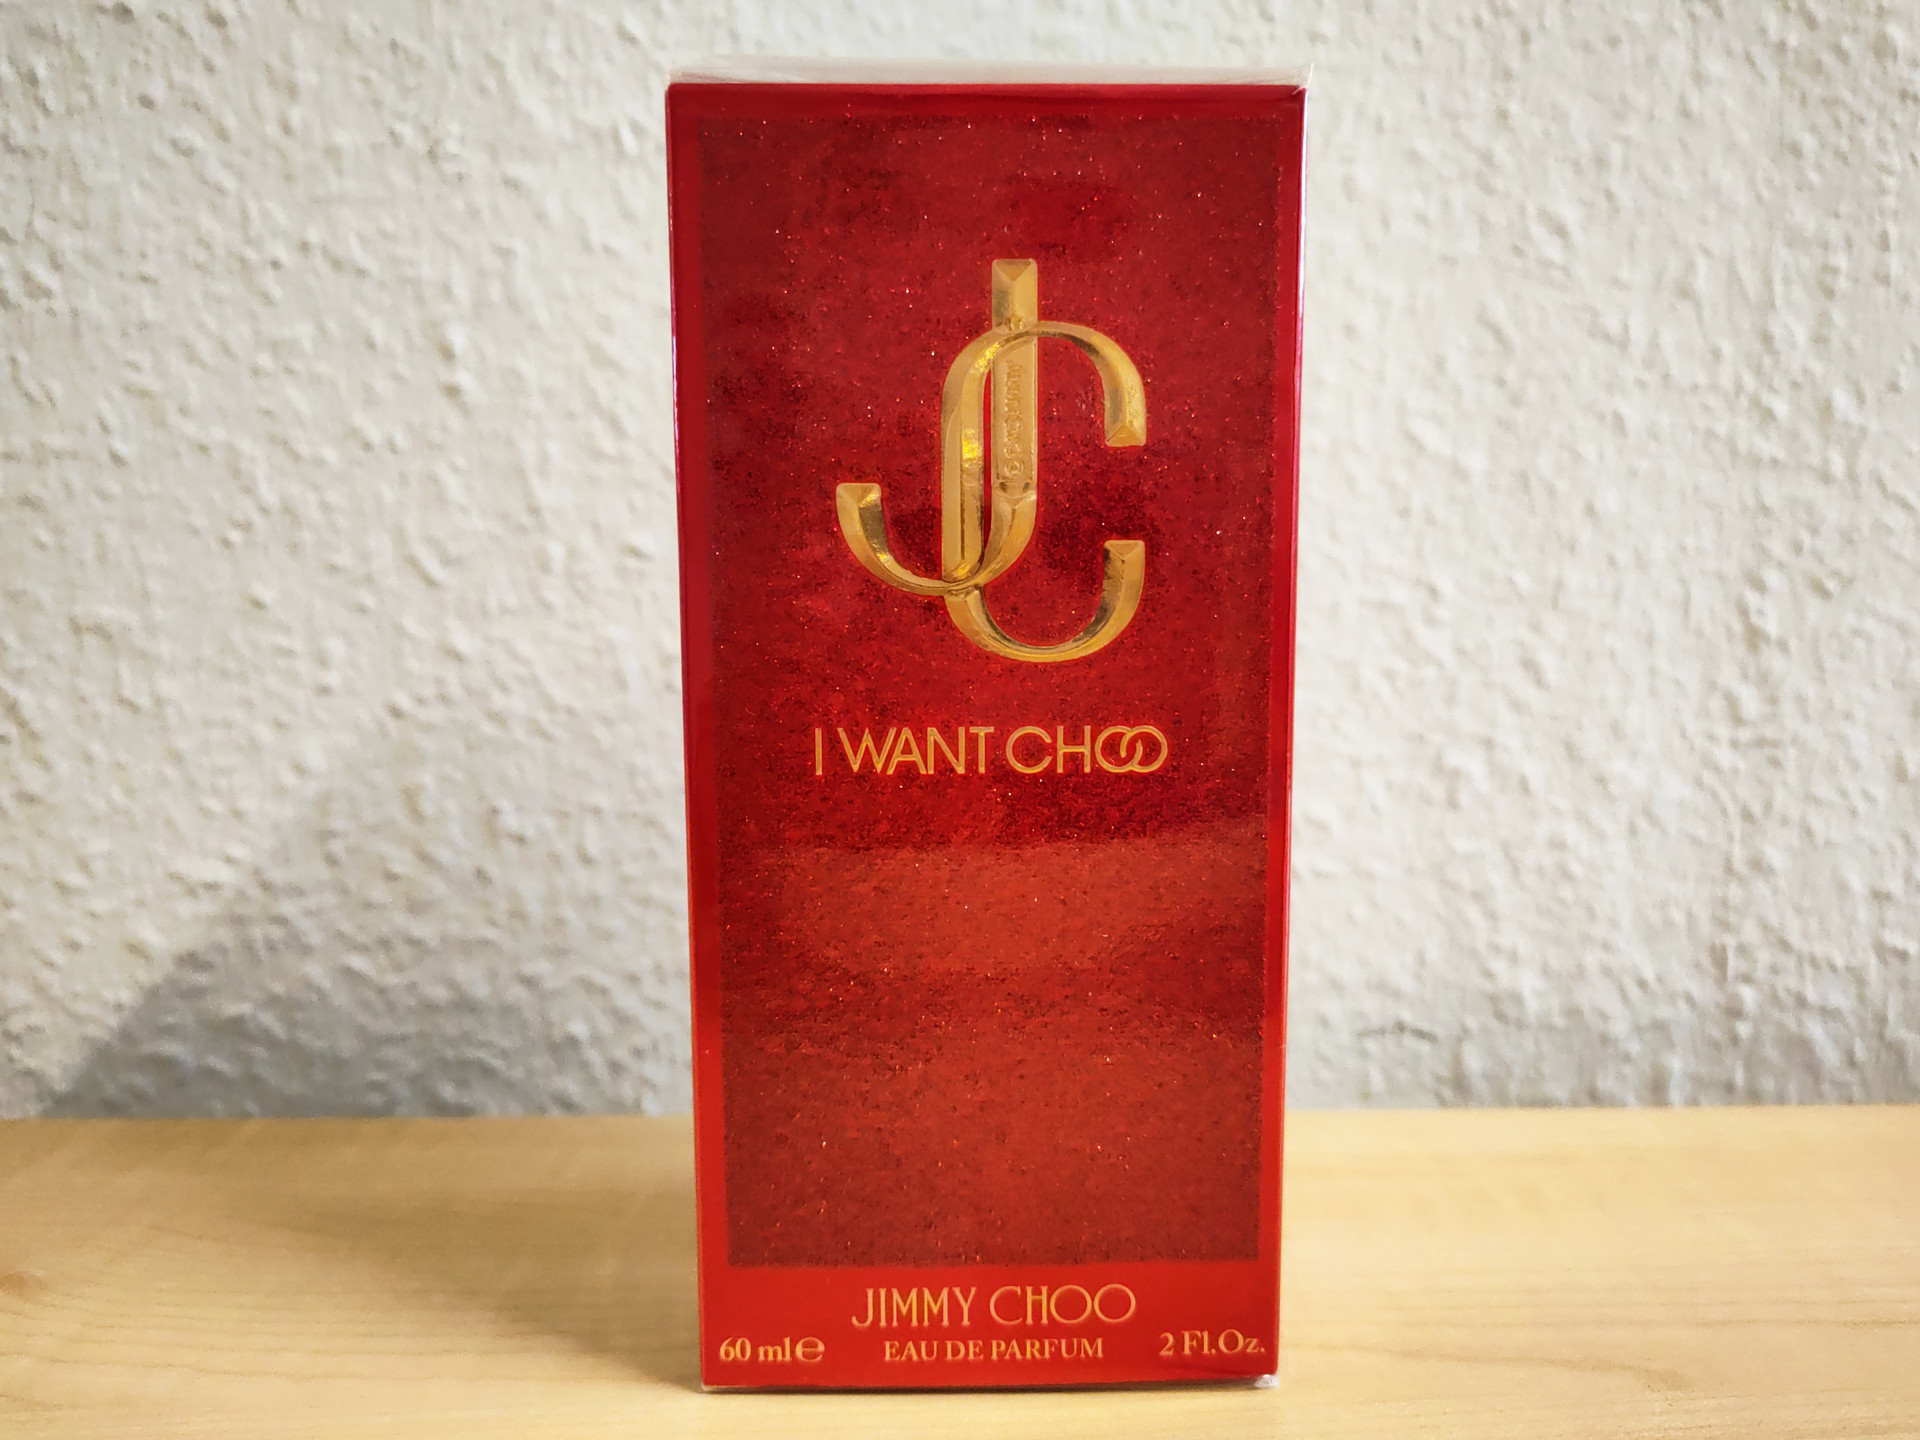 Foto zeigt "Jimmy Choo - I want Choo" Eau de Parfum